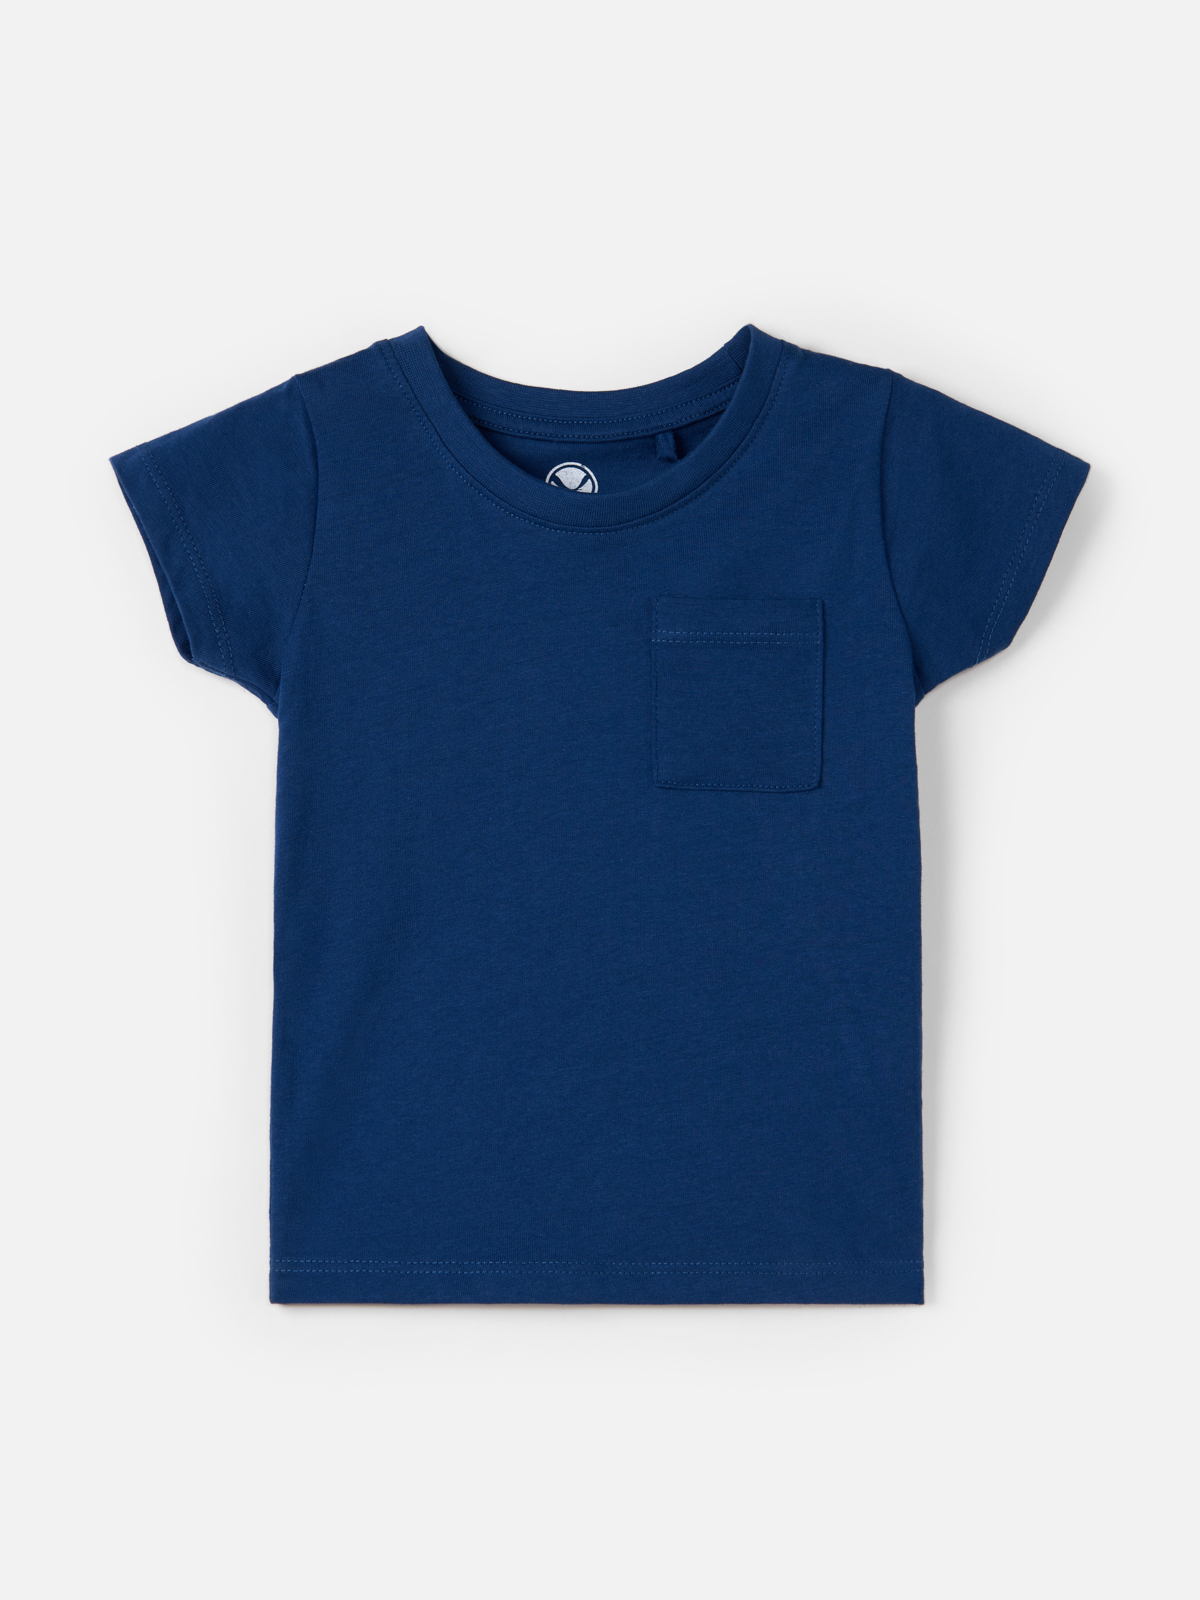 Футболка Harc Fashion для мальчиков, размер 122, HTC2306-001-Navy Blue футболка с коротким рукавом оверсайз белая button blue 134